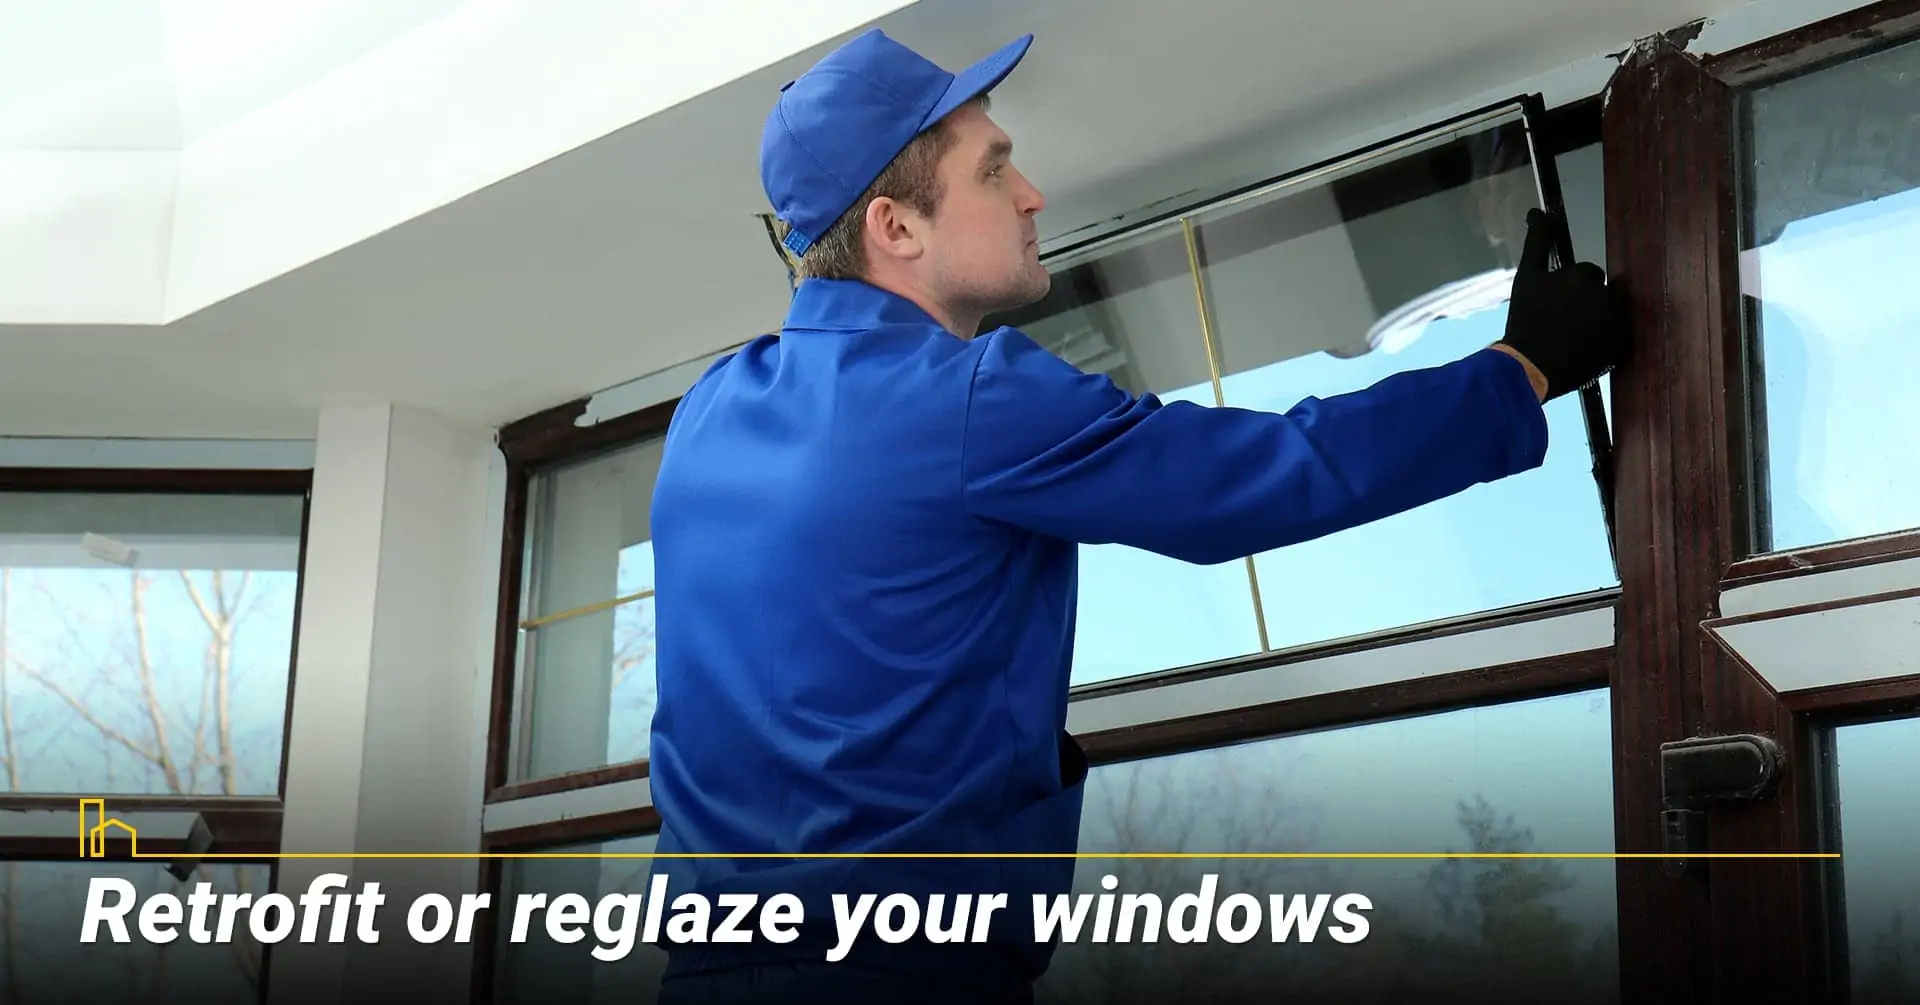 Retrofit or reglaze your windows, recondition old windows